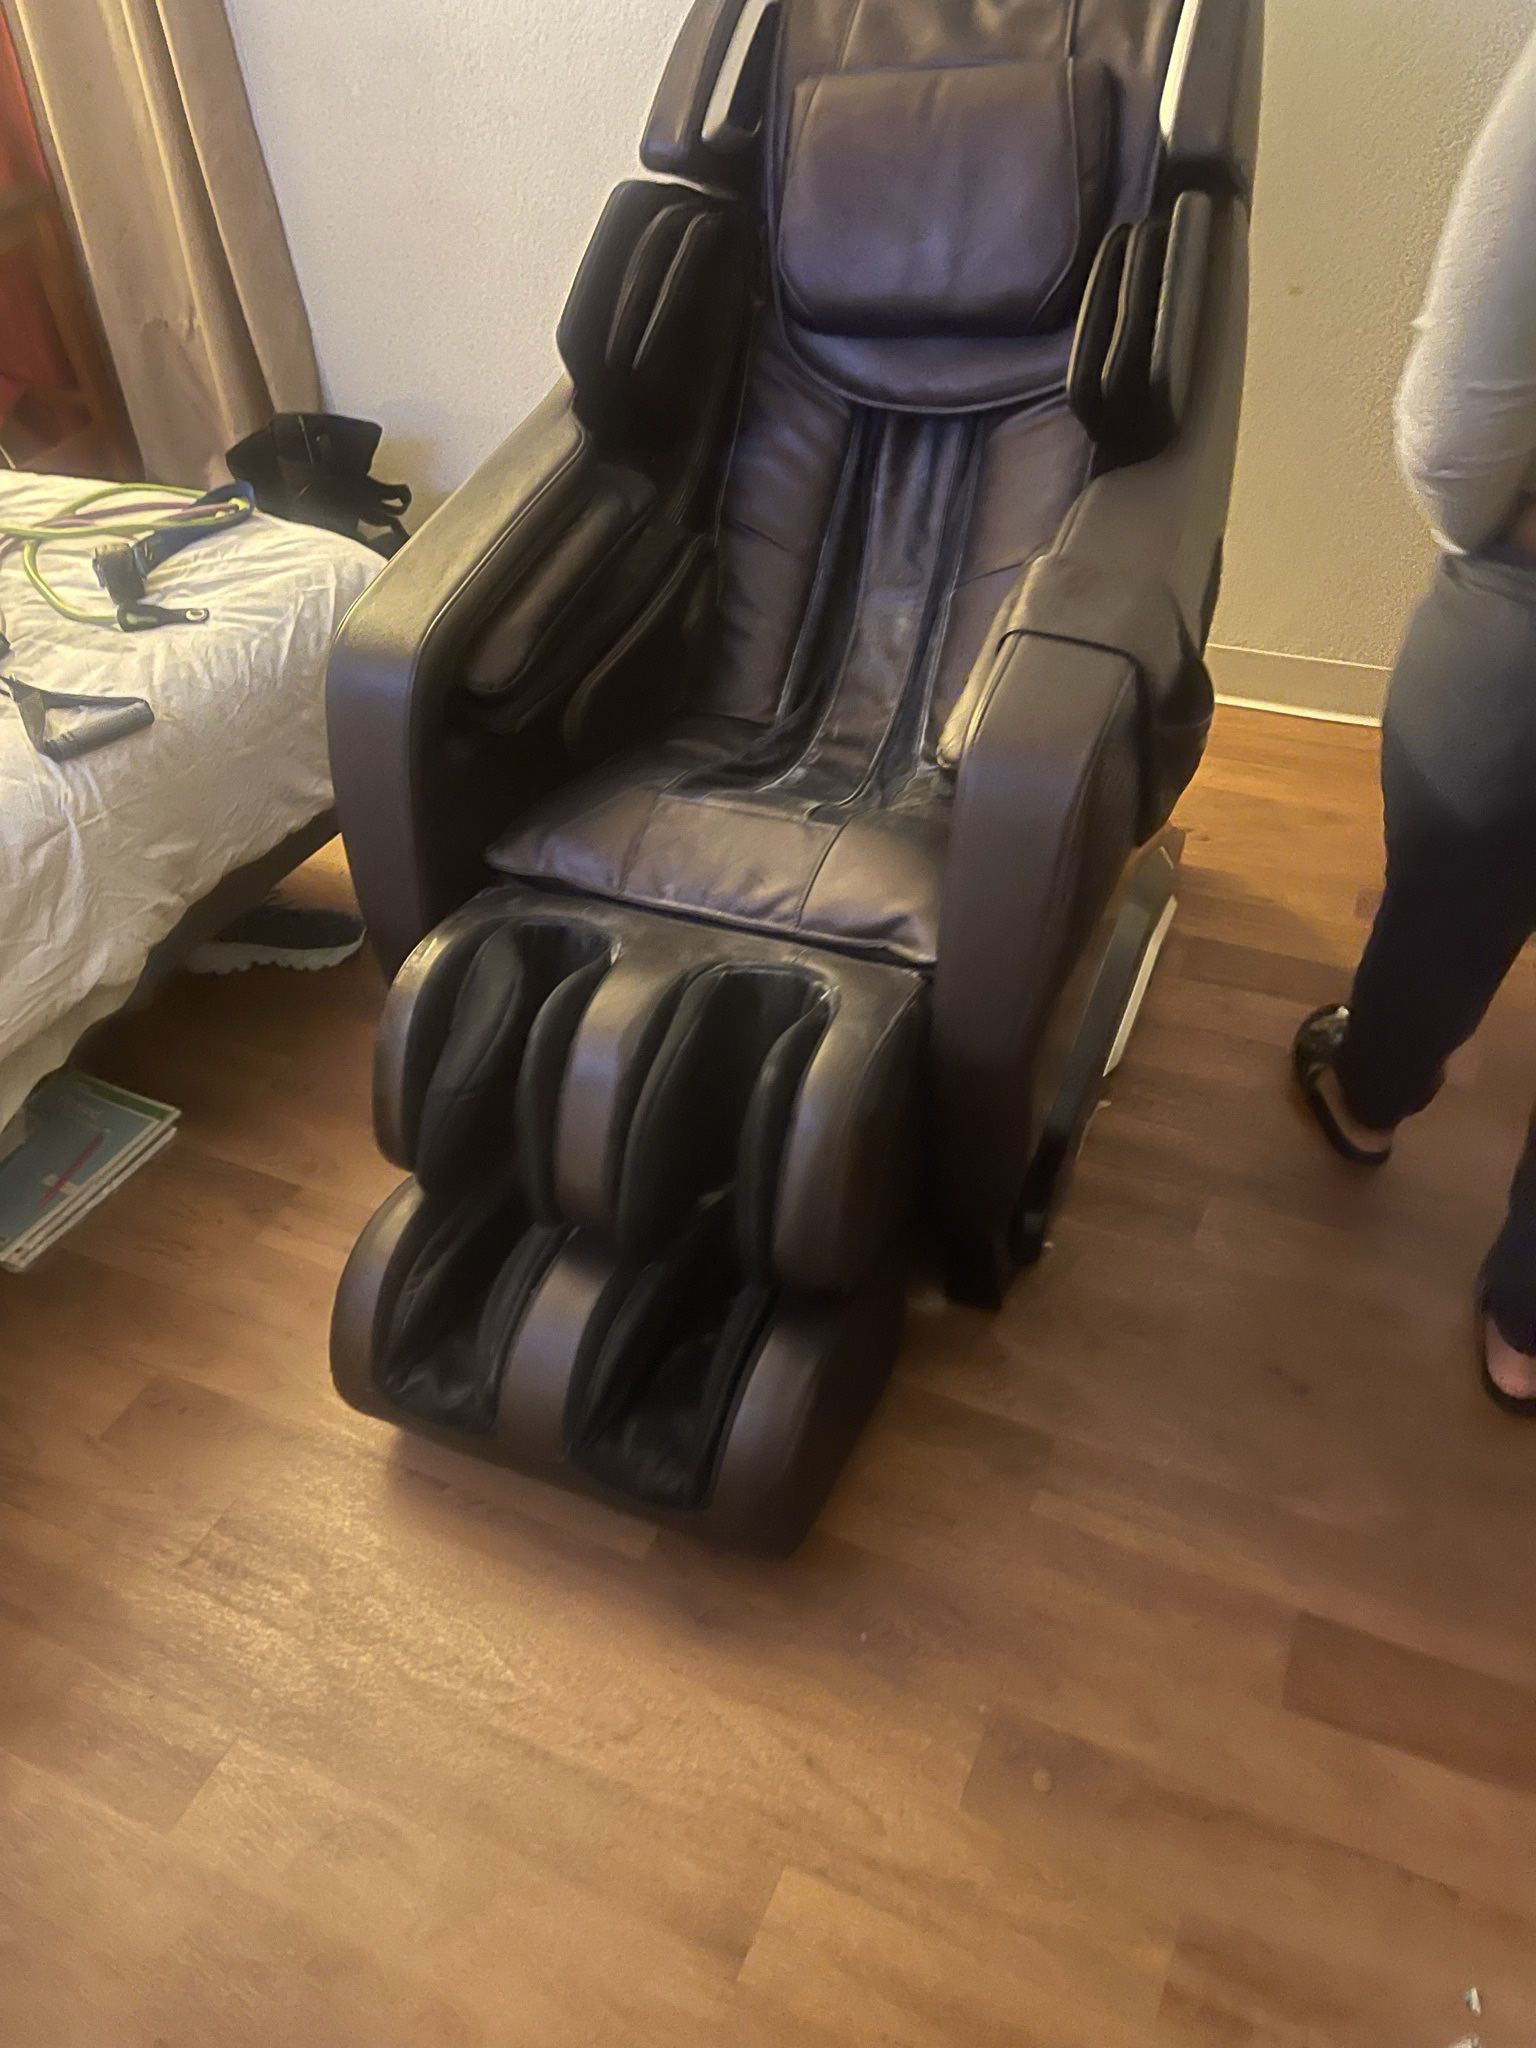 Riage Massage Chair